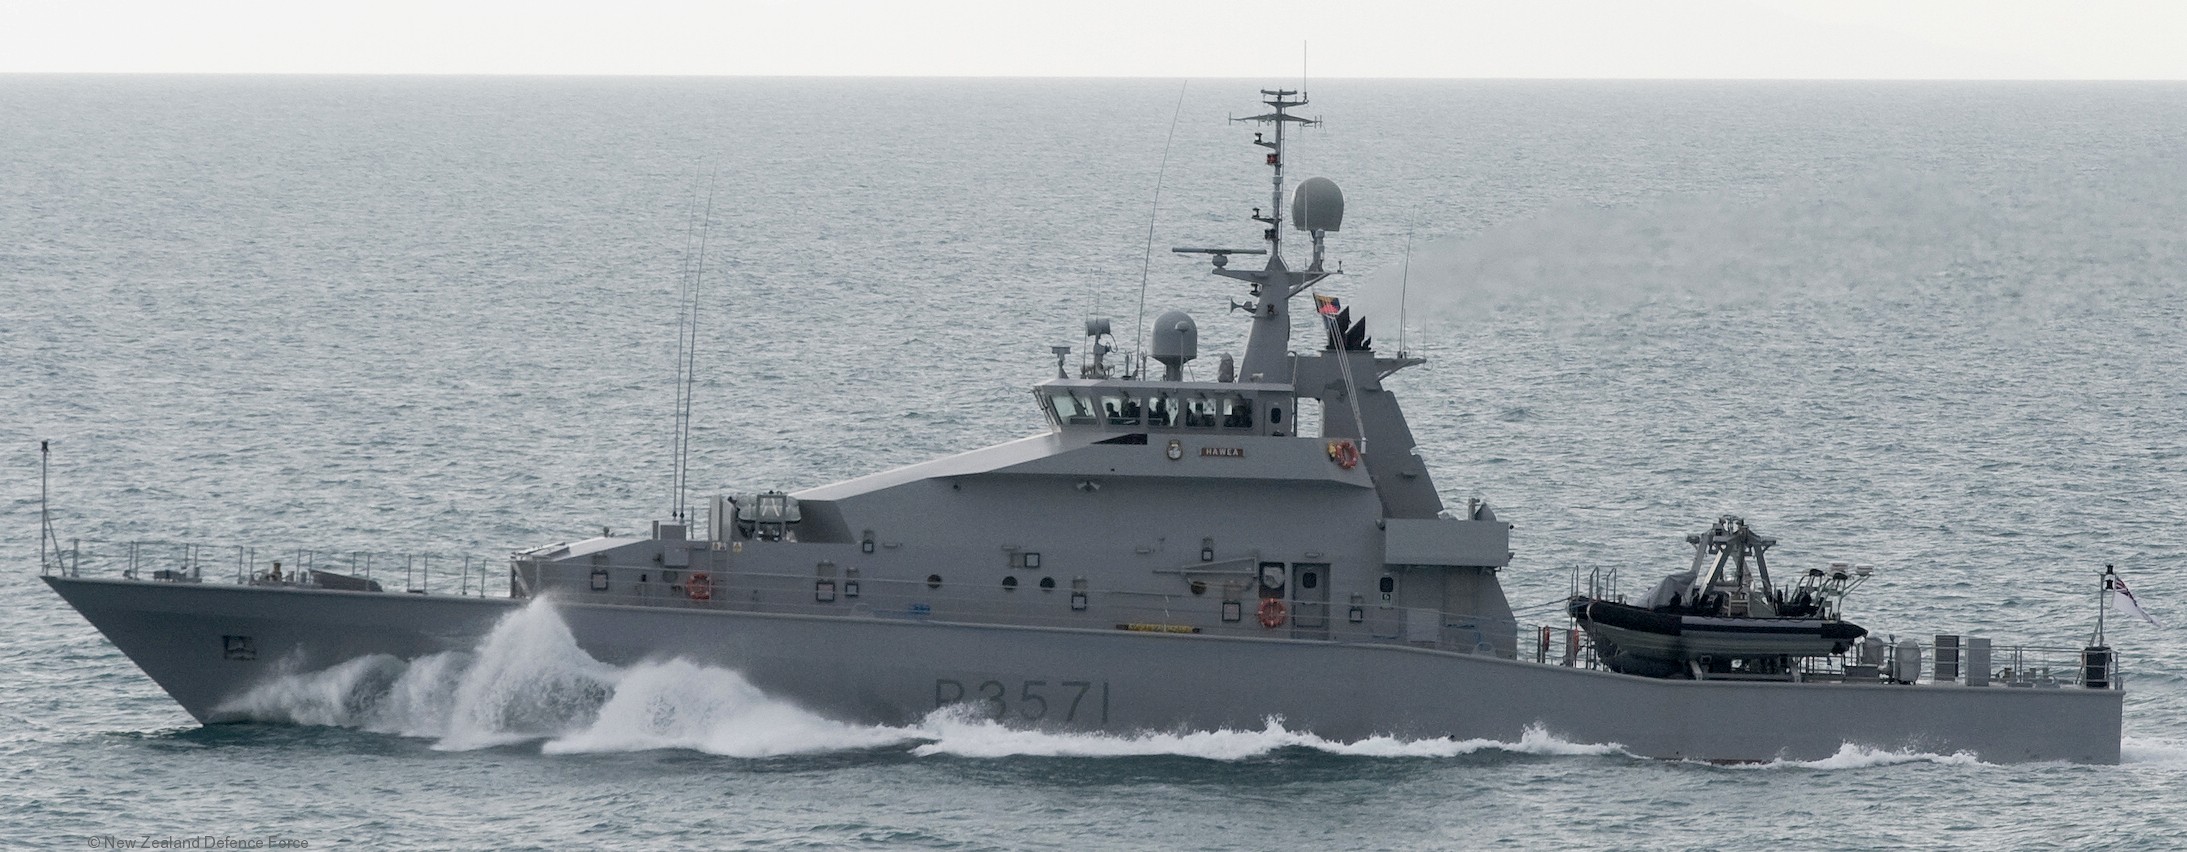 p-3571 hmnzs hawea protector class inshore patrol vessel royal new zealand navy 04